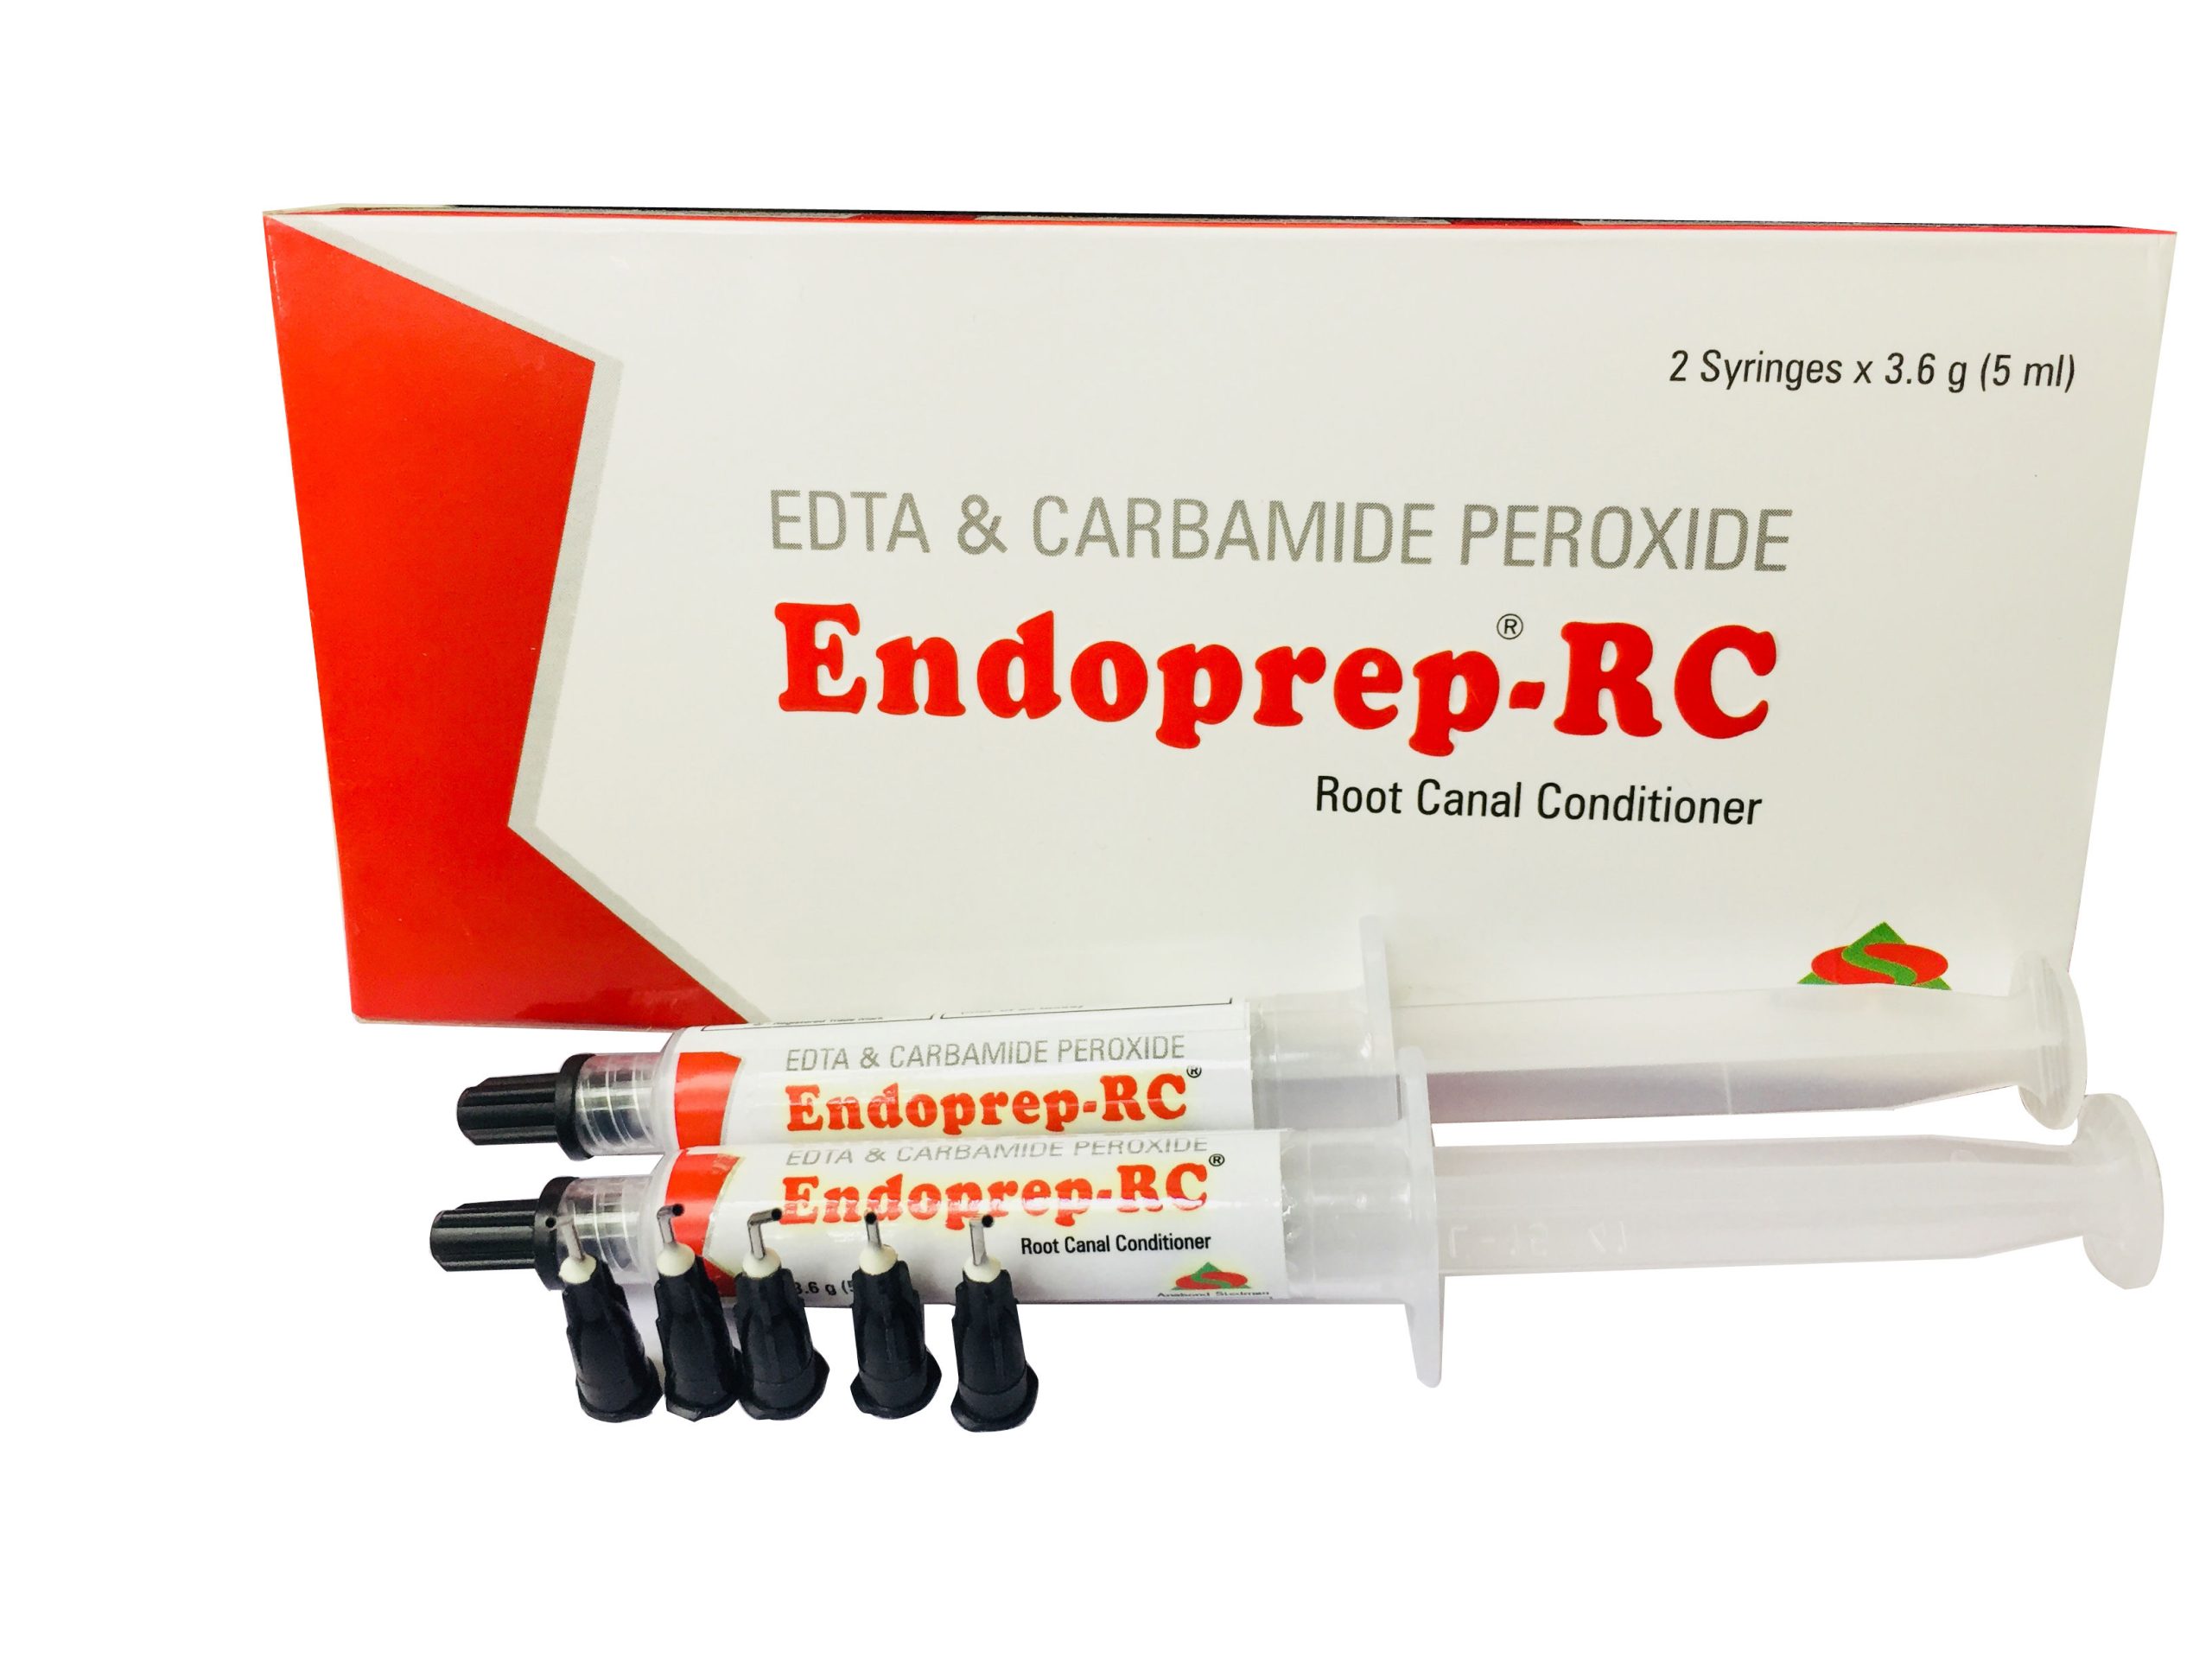 Anabond Endoprep-Rc - Dentalstall India